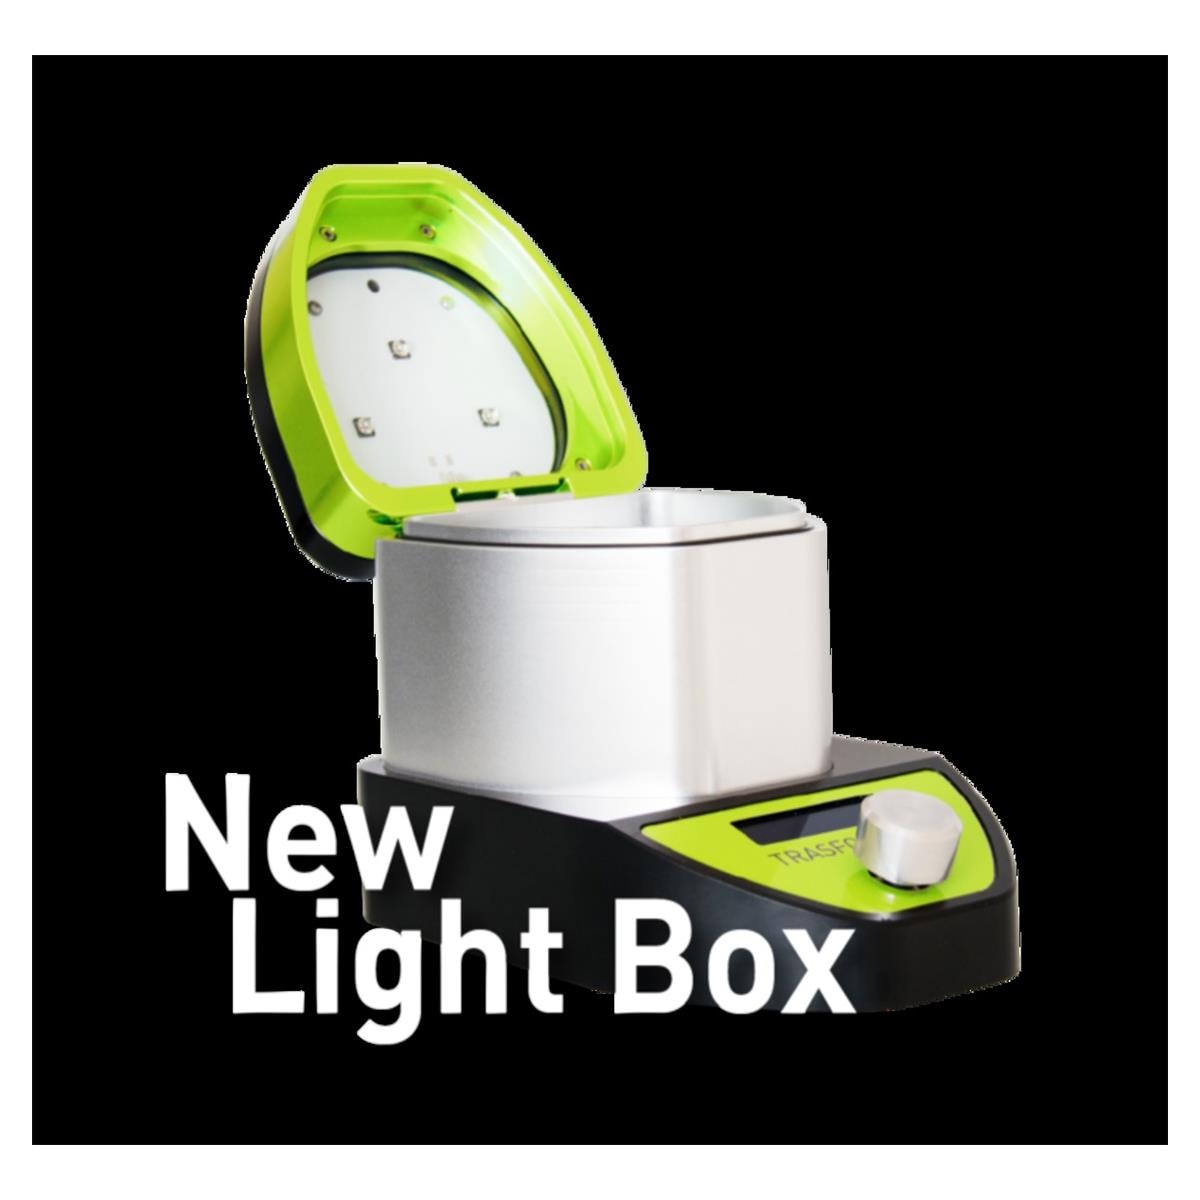 New Light Box TRASFORMER - Le polymristaeur